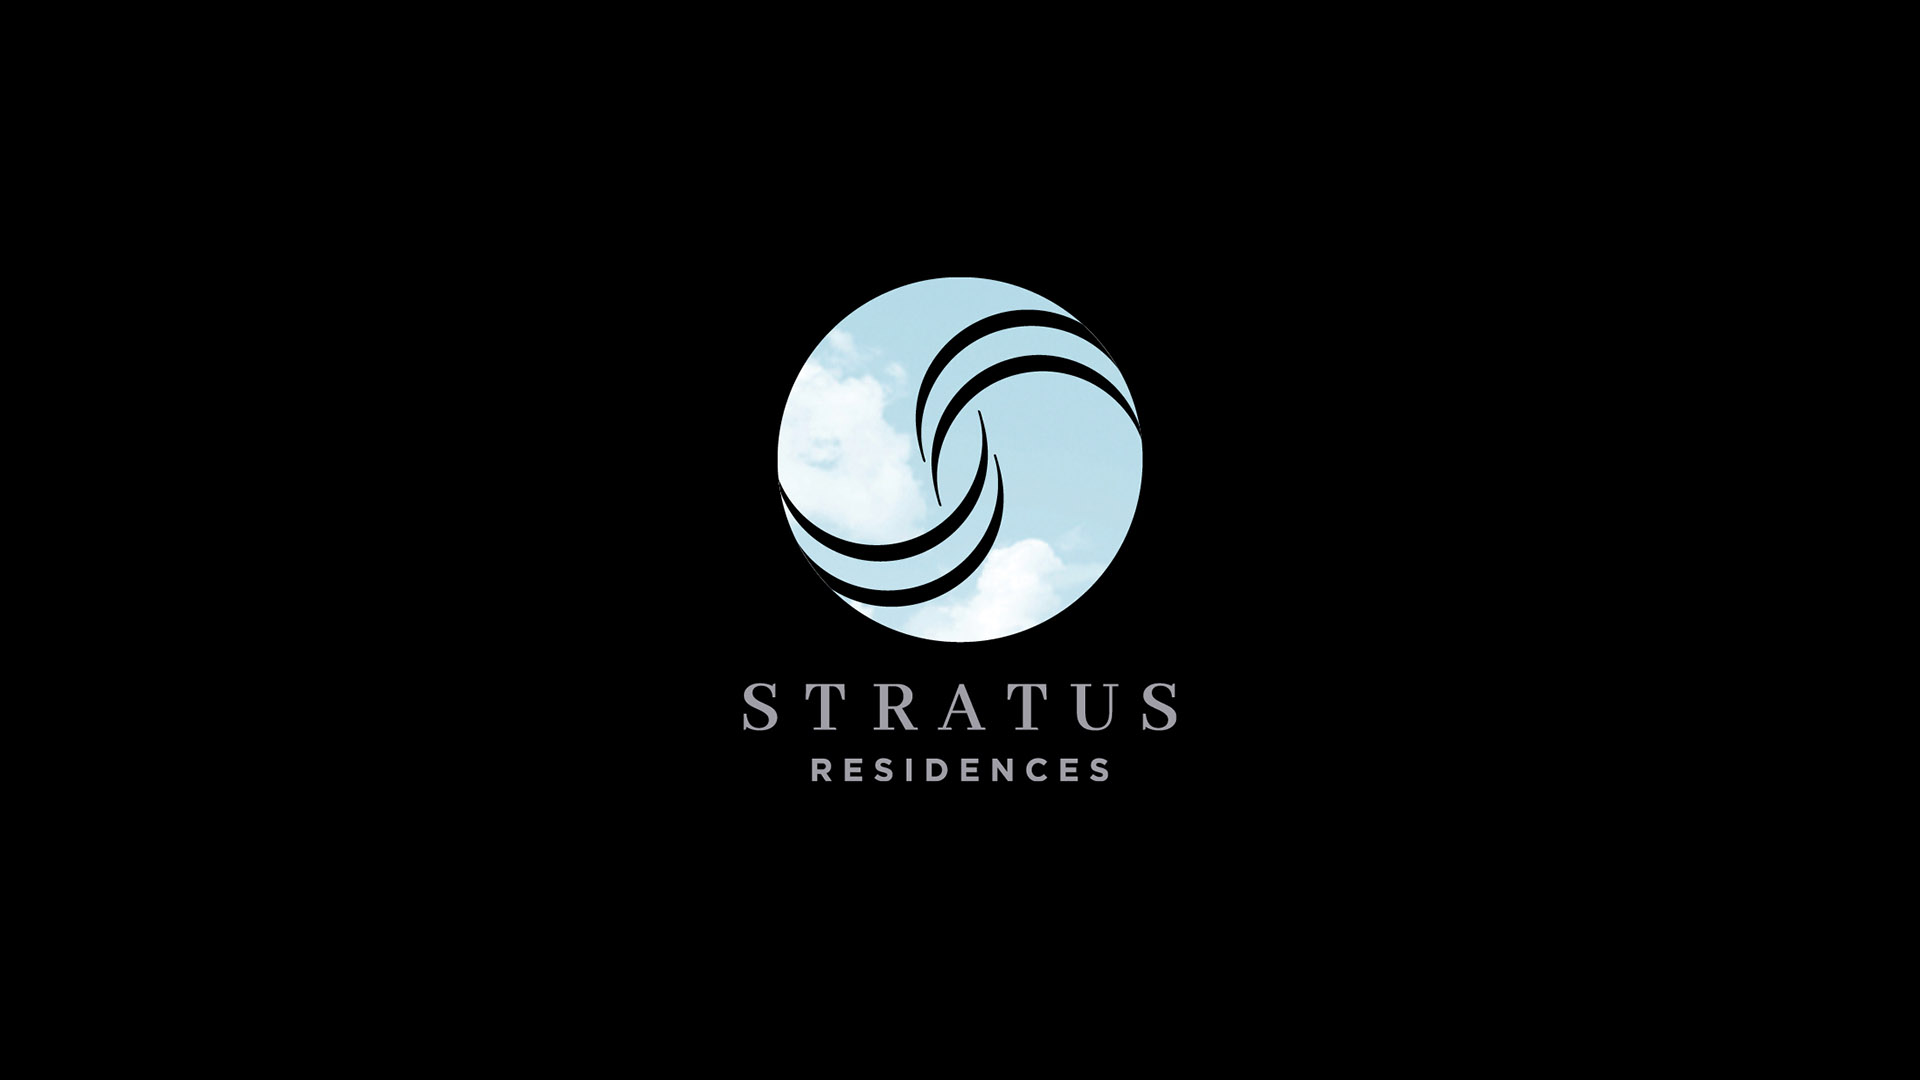 stratus residences logo on black